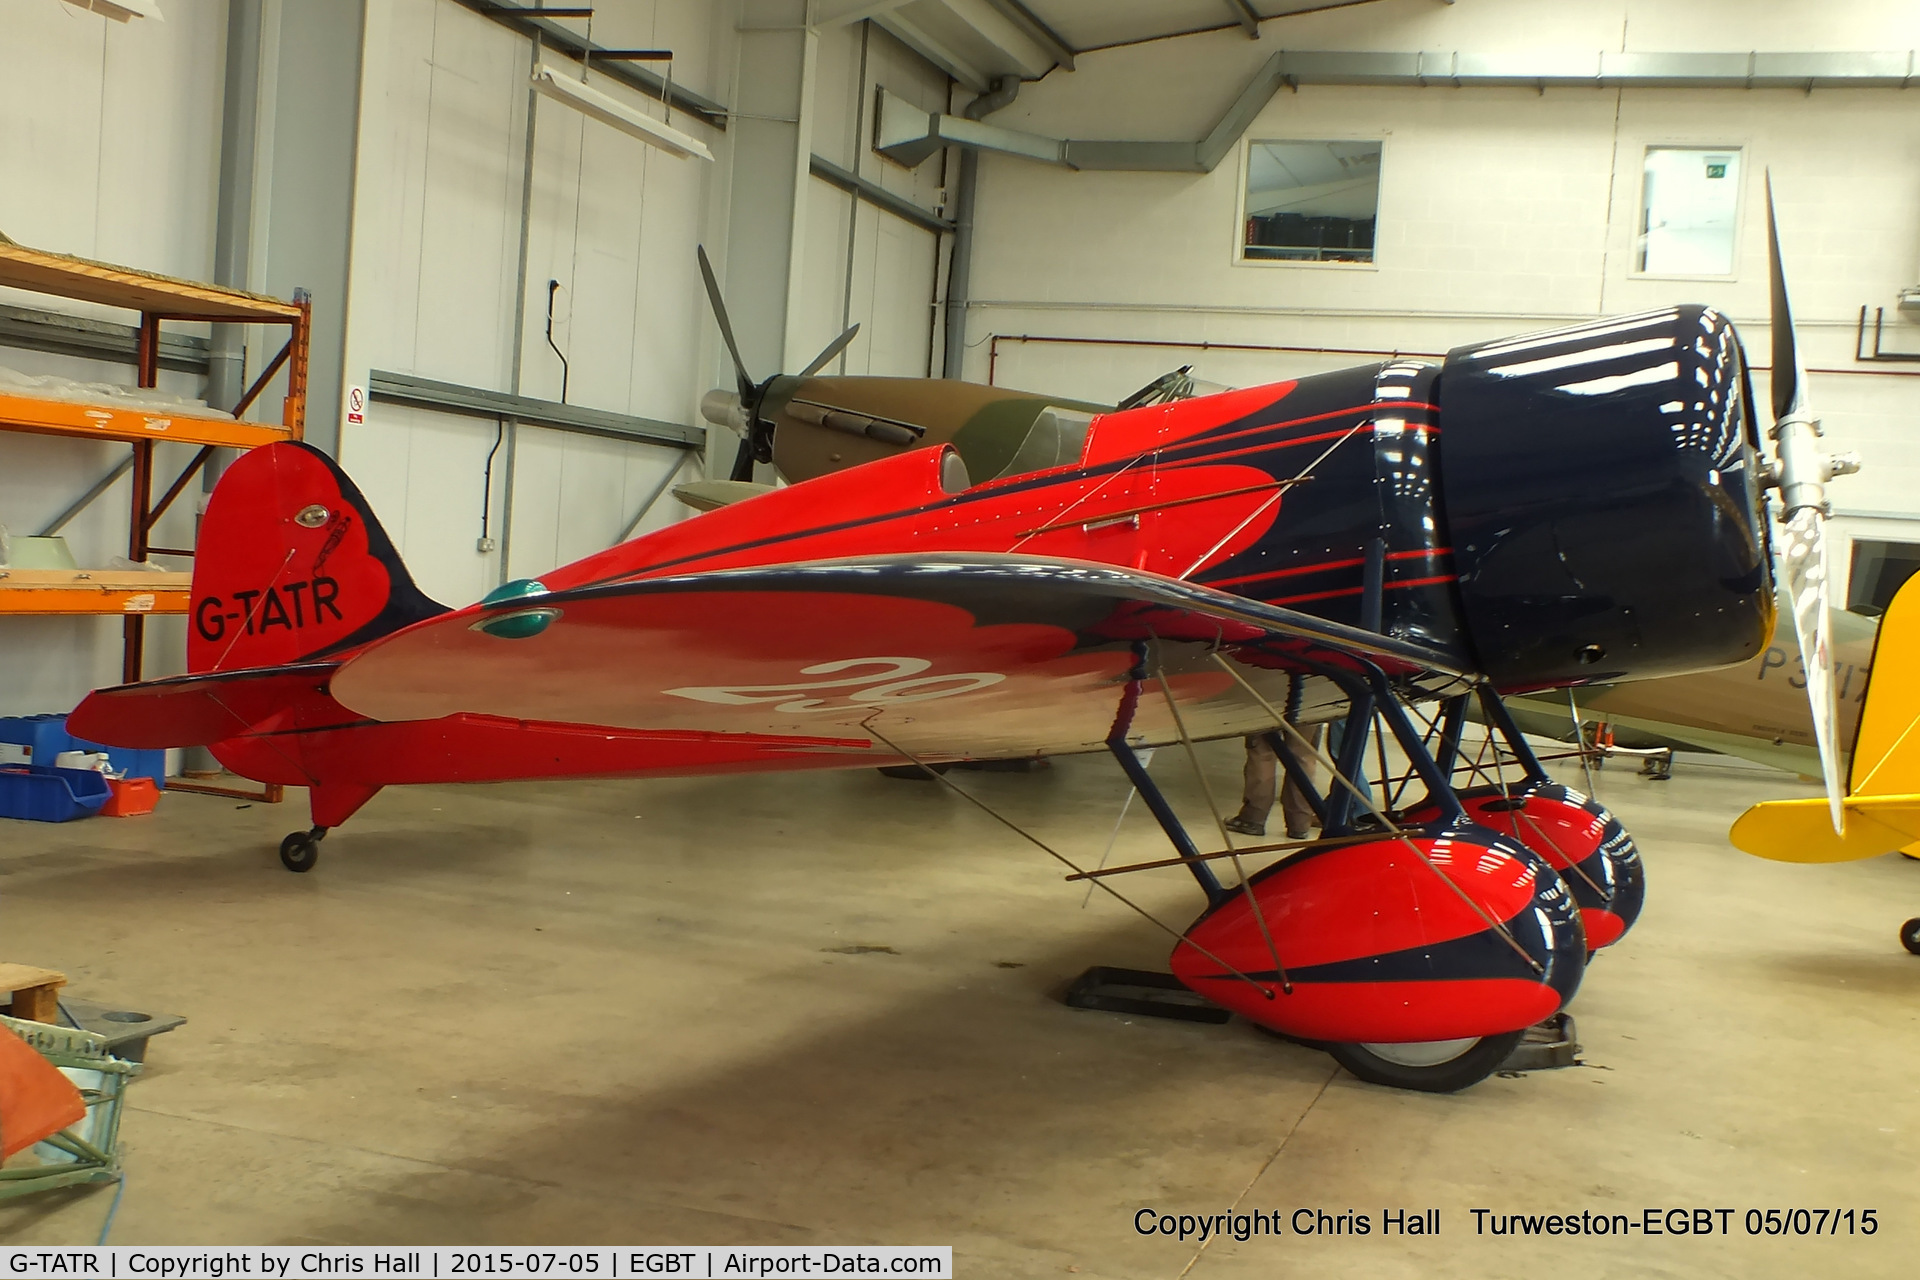 G-TATR, 2012 Travel Air Type R Racer Replica C/N LAA 362-14892, at Turweston